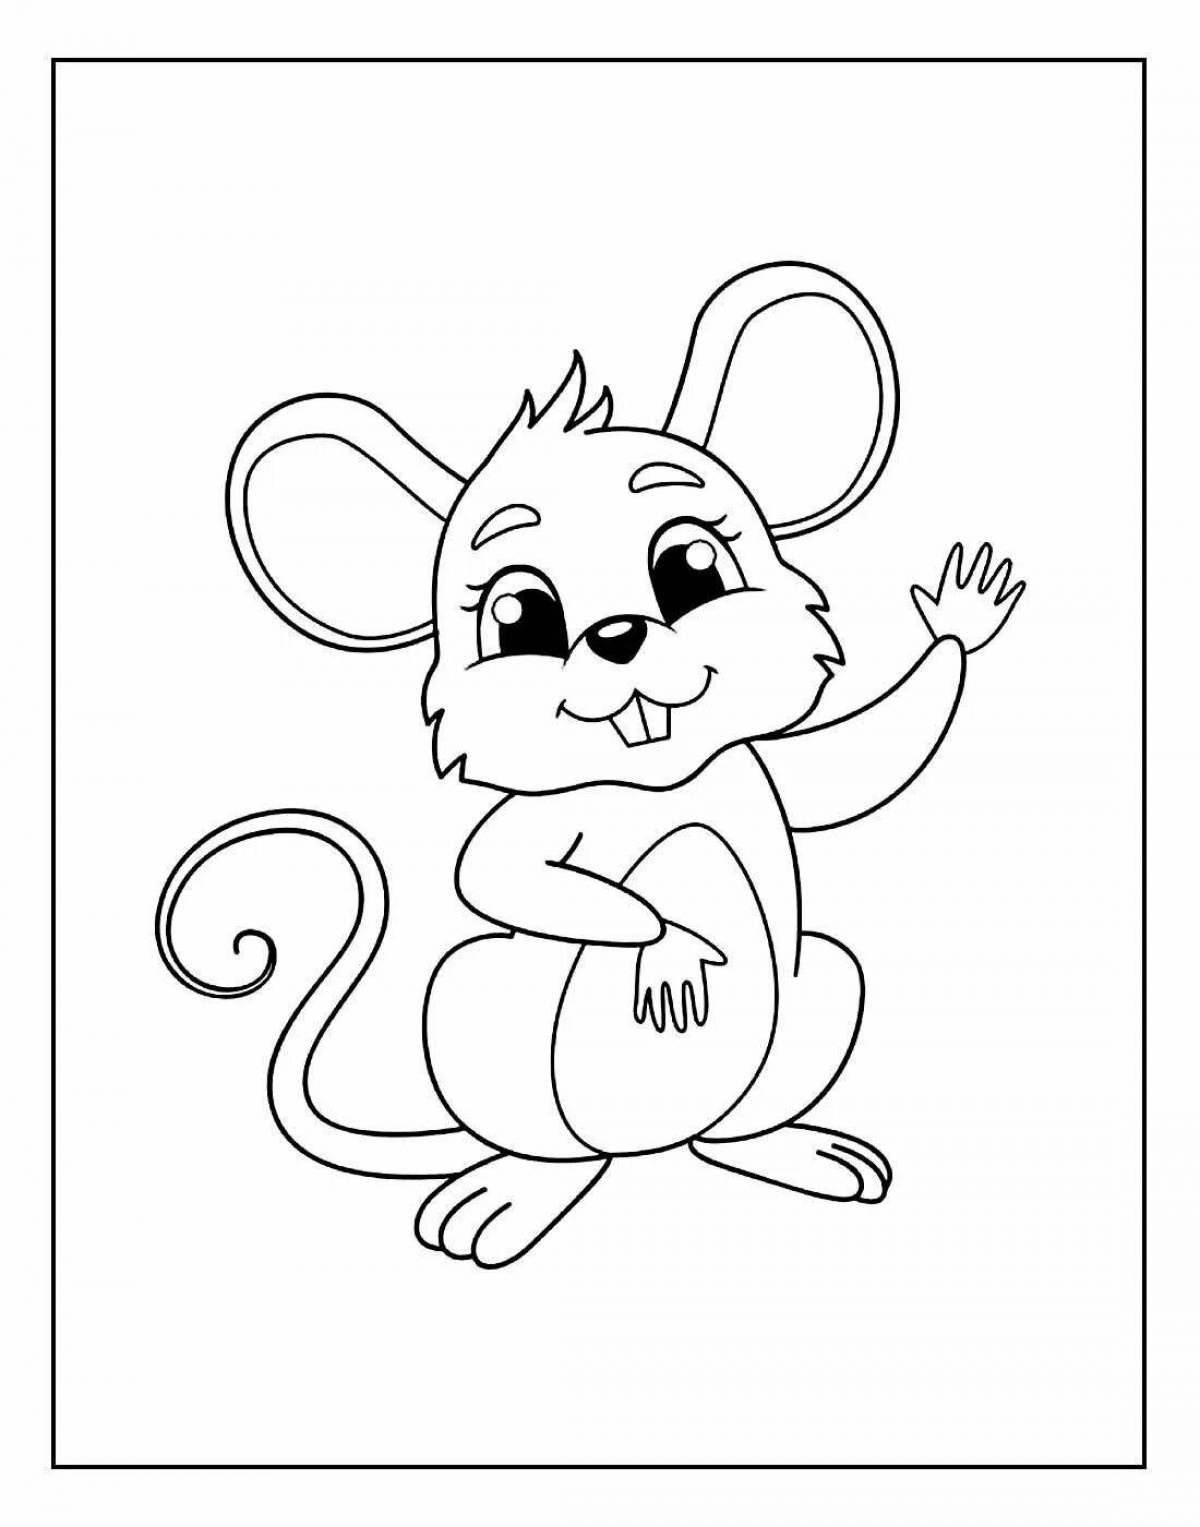 Раскраска splendid mouse для детей 4-5 лет